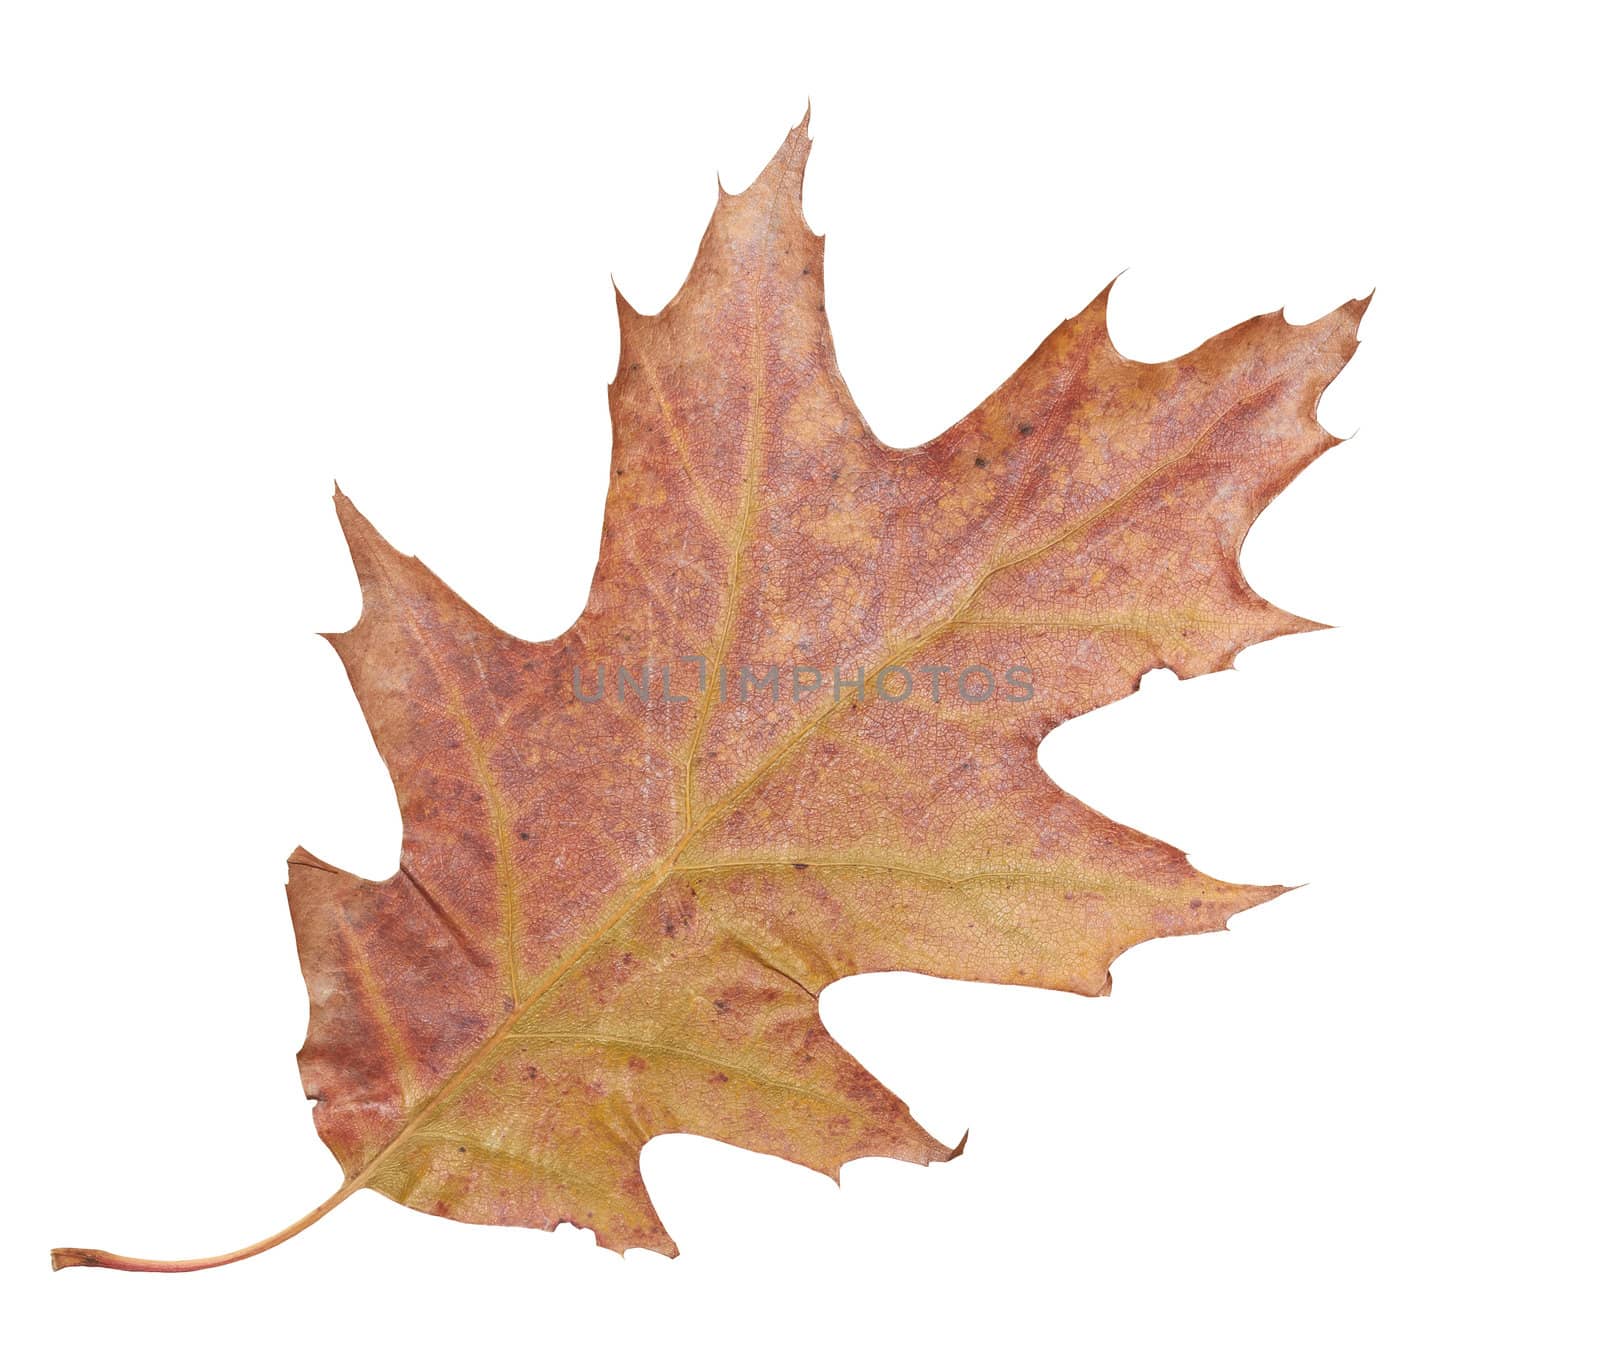 Maple-leaf by subos